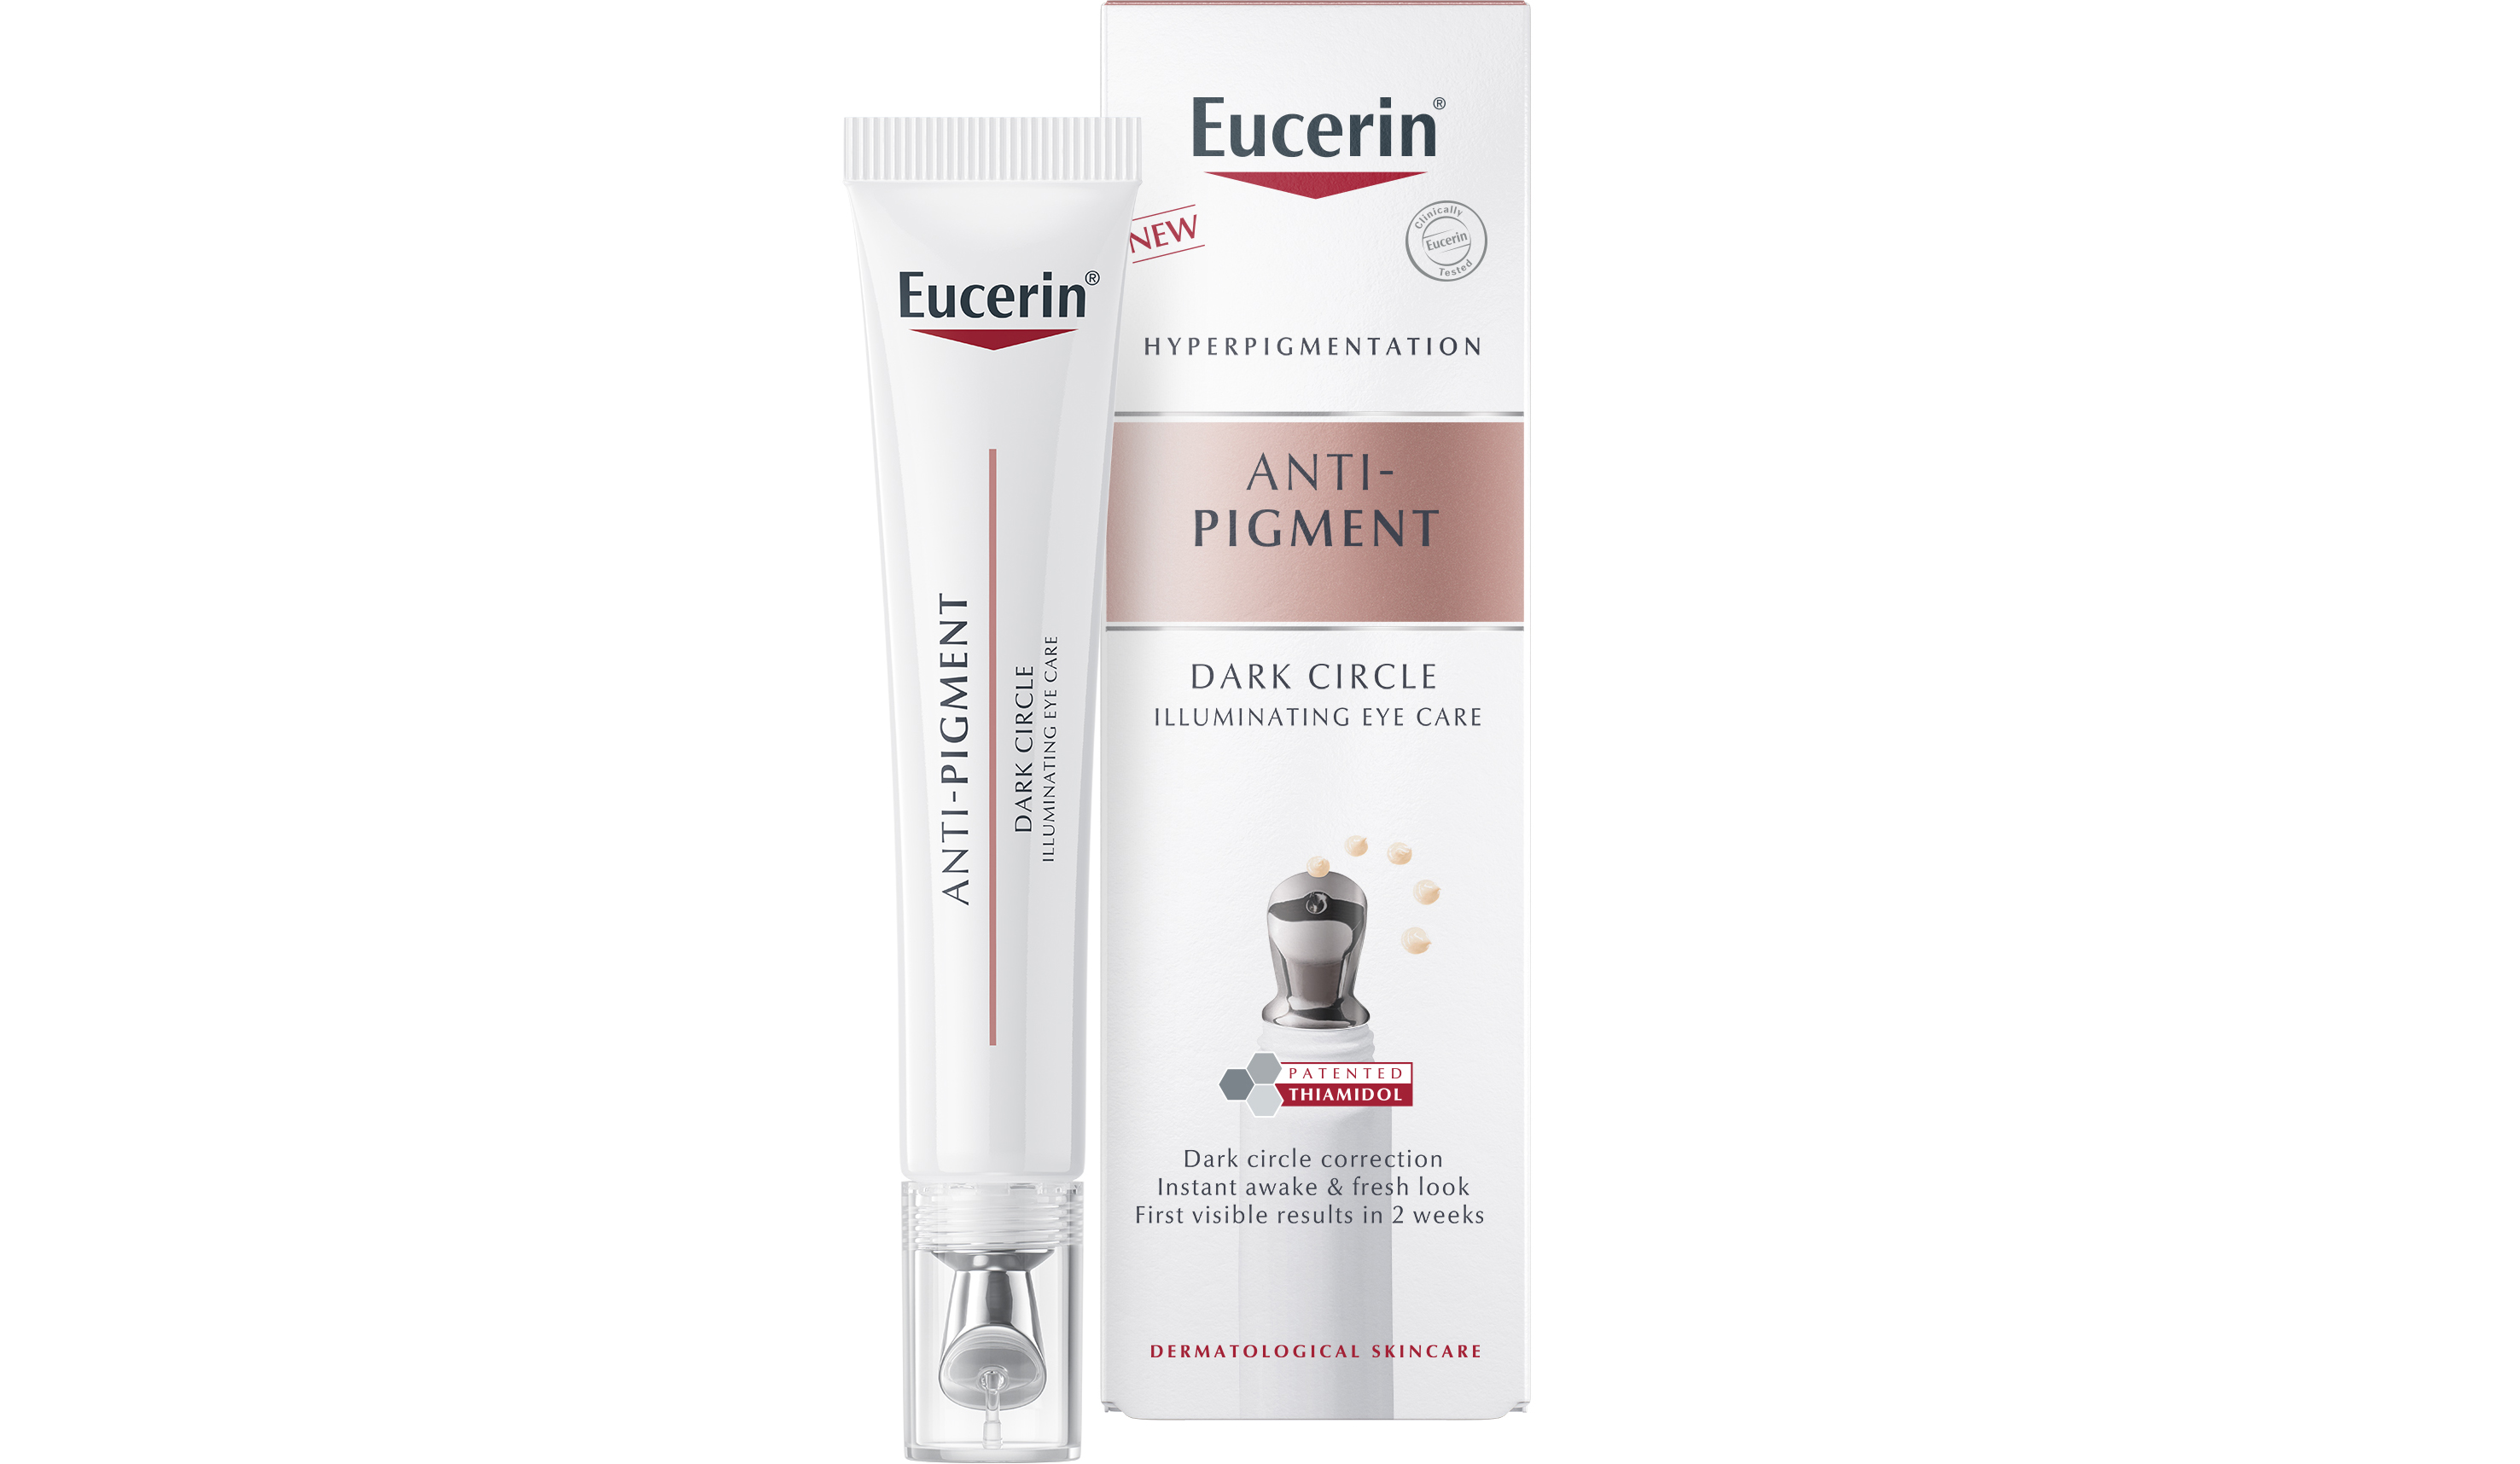 Eucerin Anti-Pigment Dark Circle Illuminating Eye Care Cream, £21 (was £28), Boots